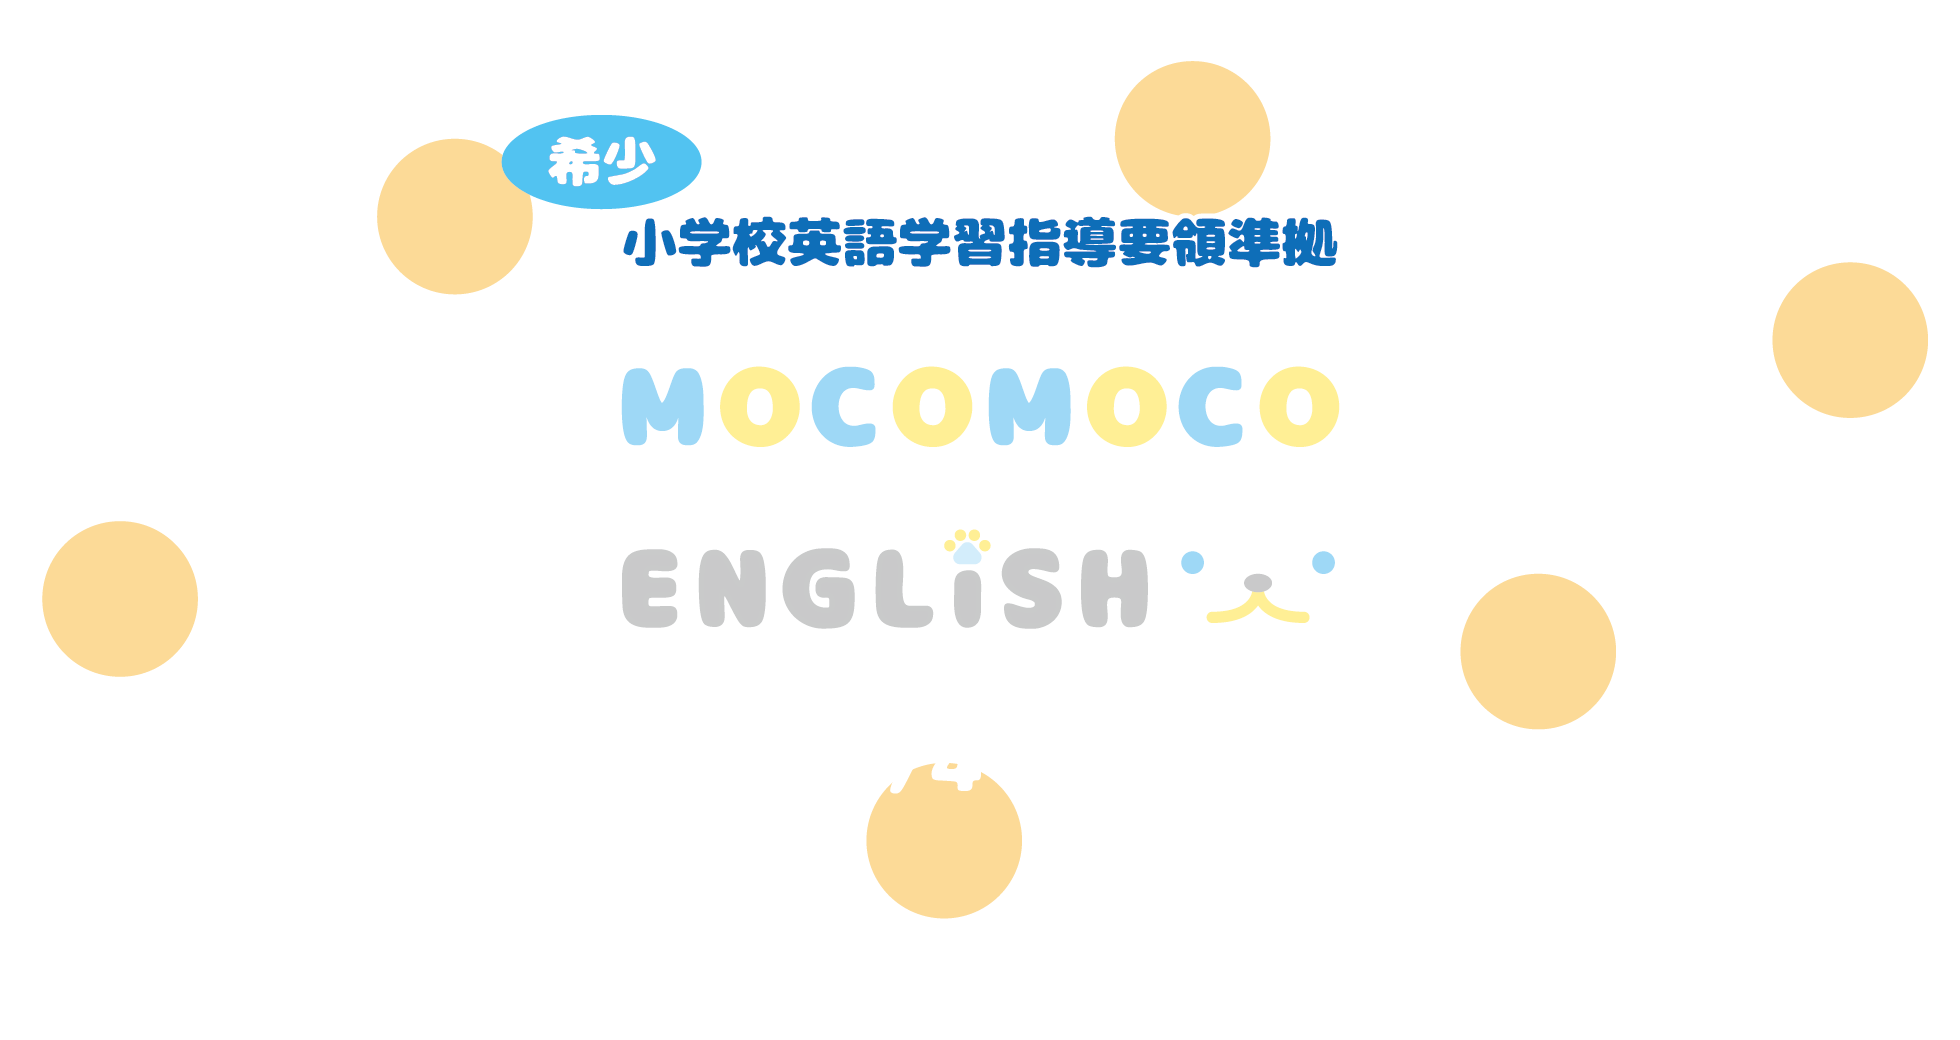 MOCOMOCO ENGLiSH title